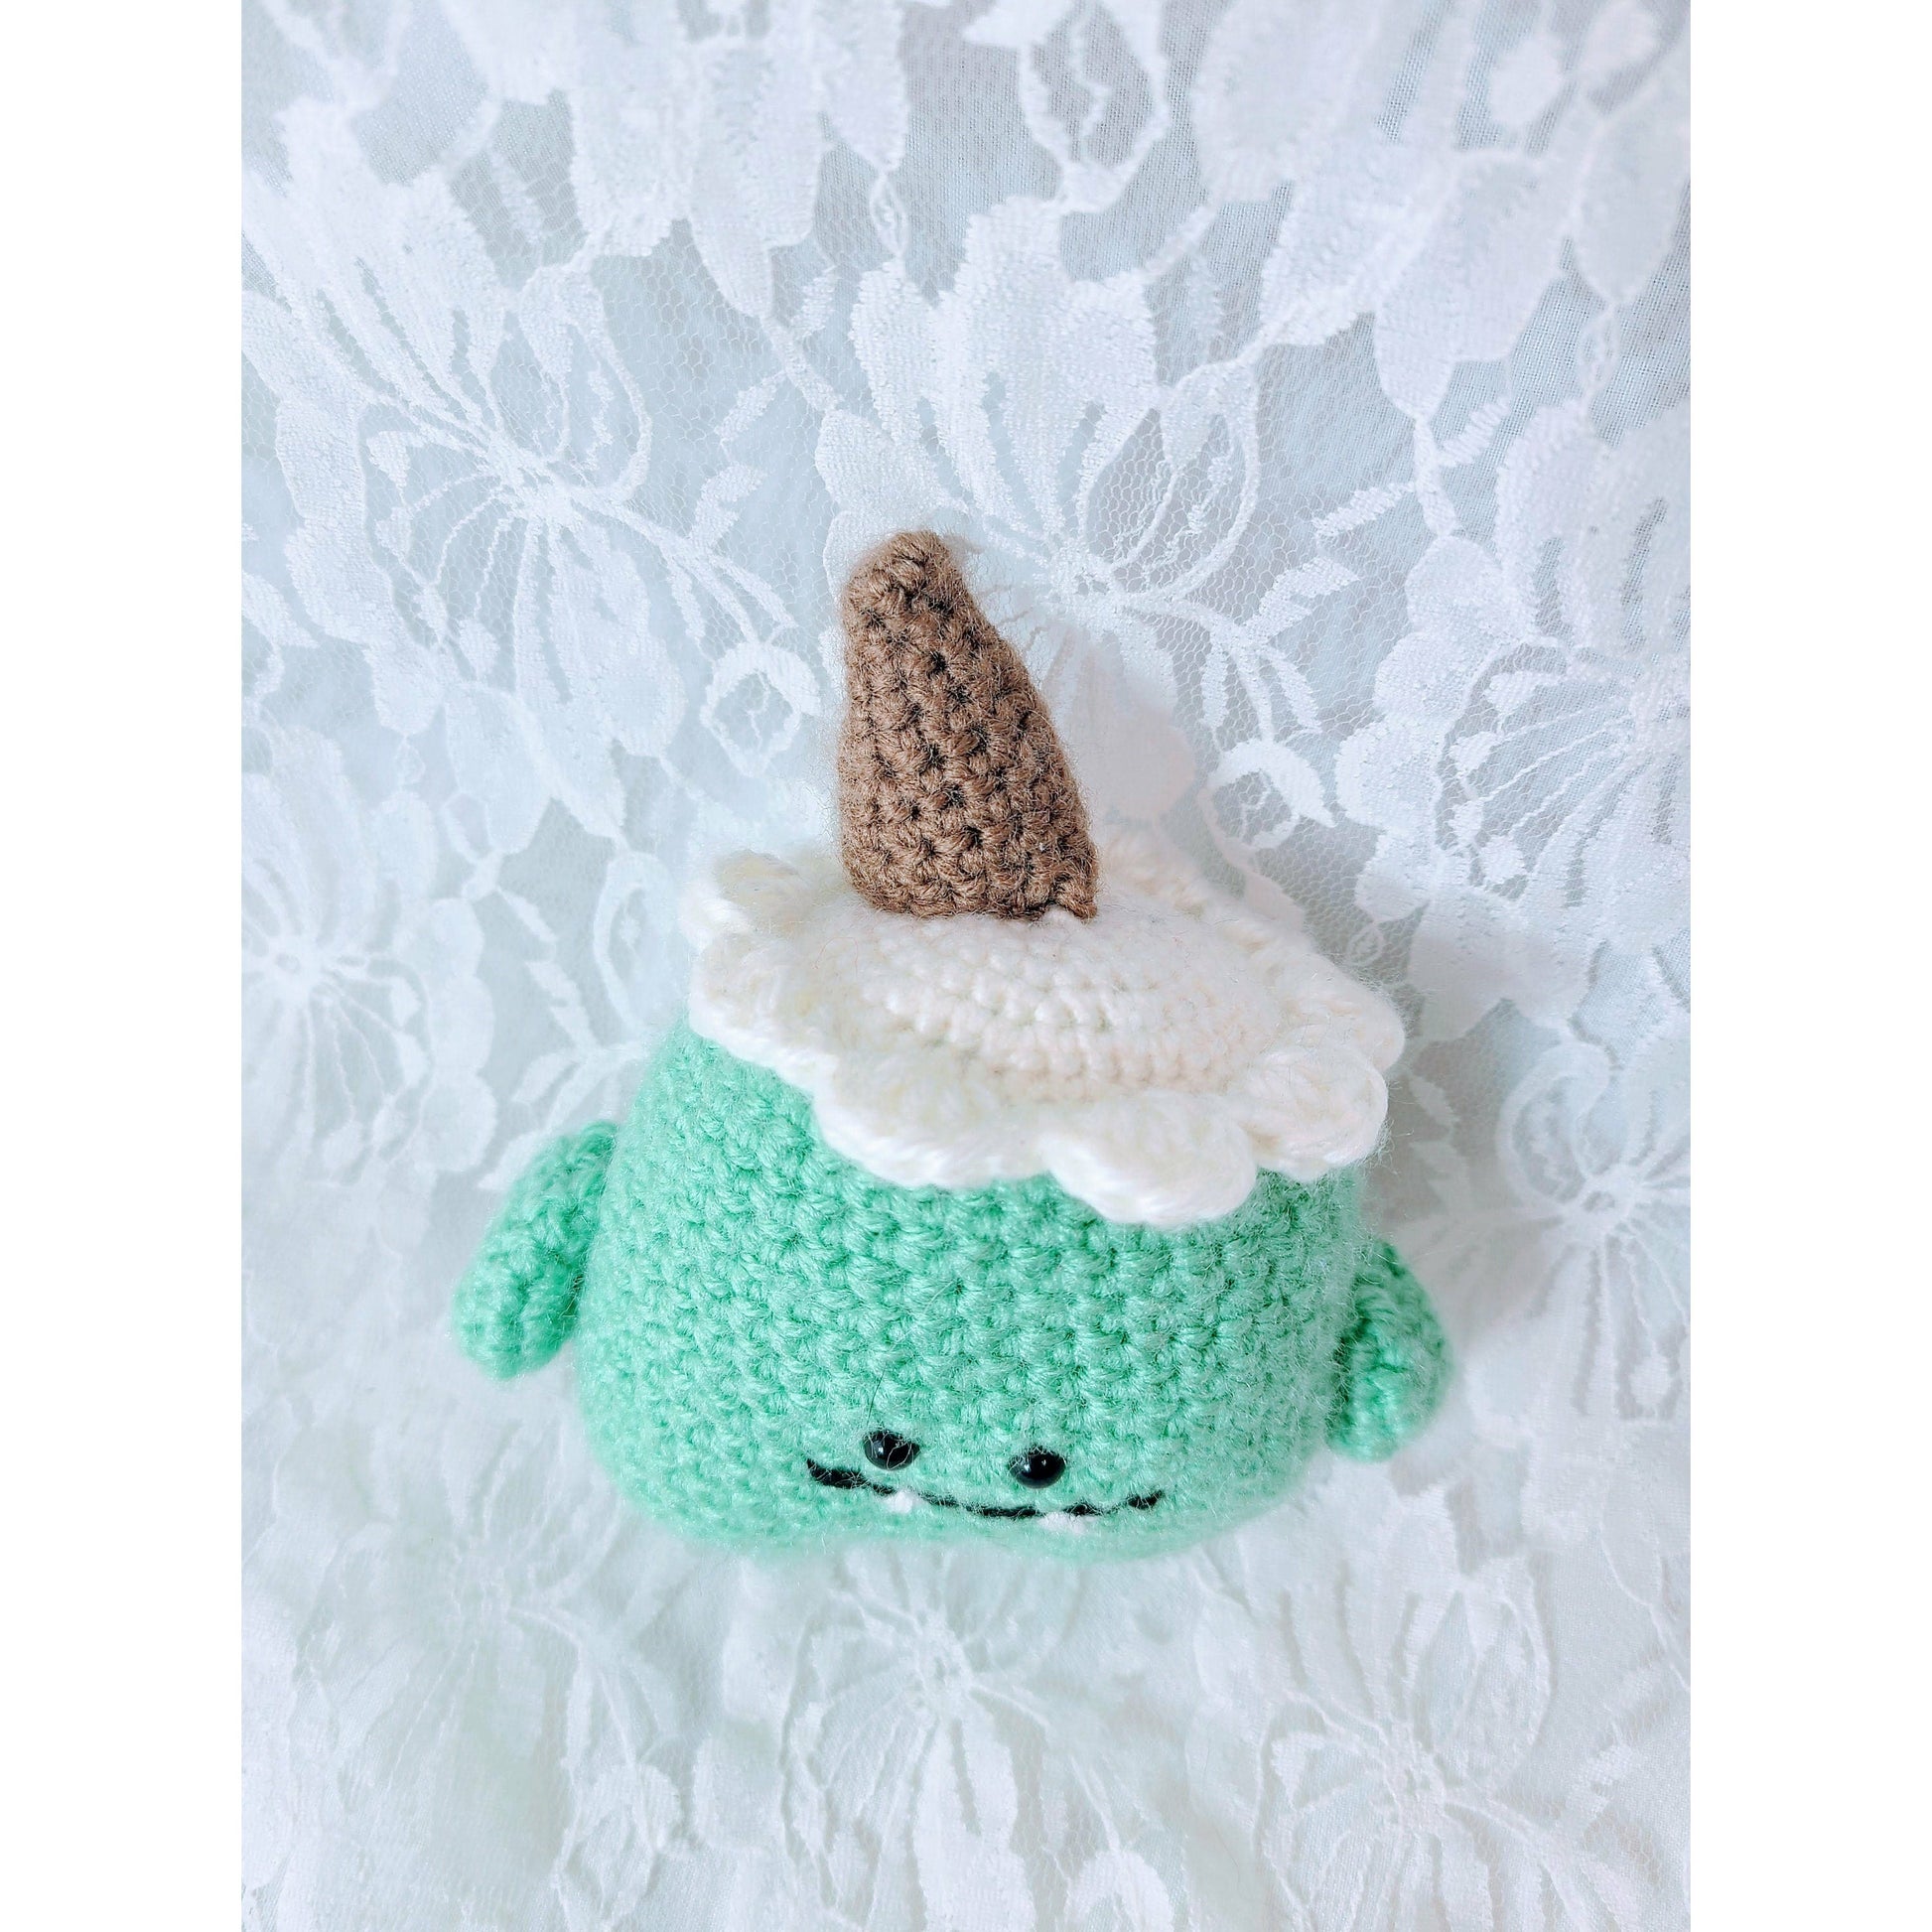 Handmade Plush Stuffed Animal ~ Crochet Japanese Amigurumi Creature! Easter Basket Filler!